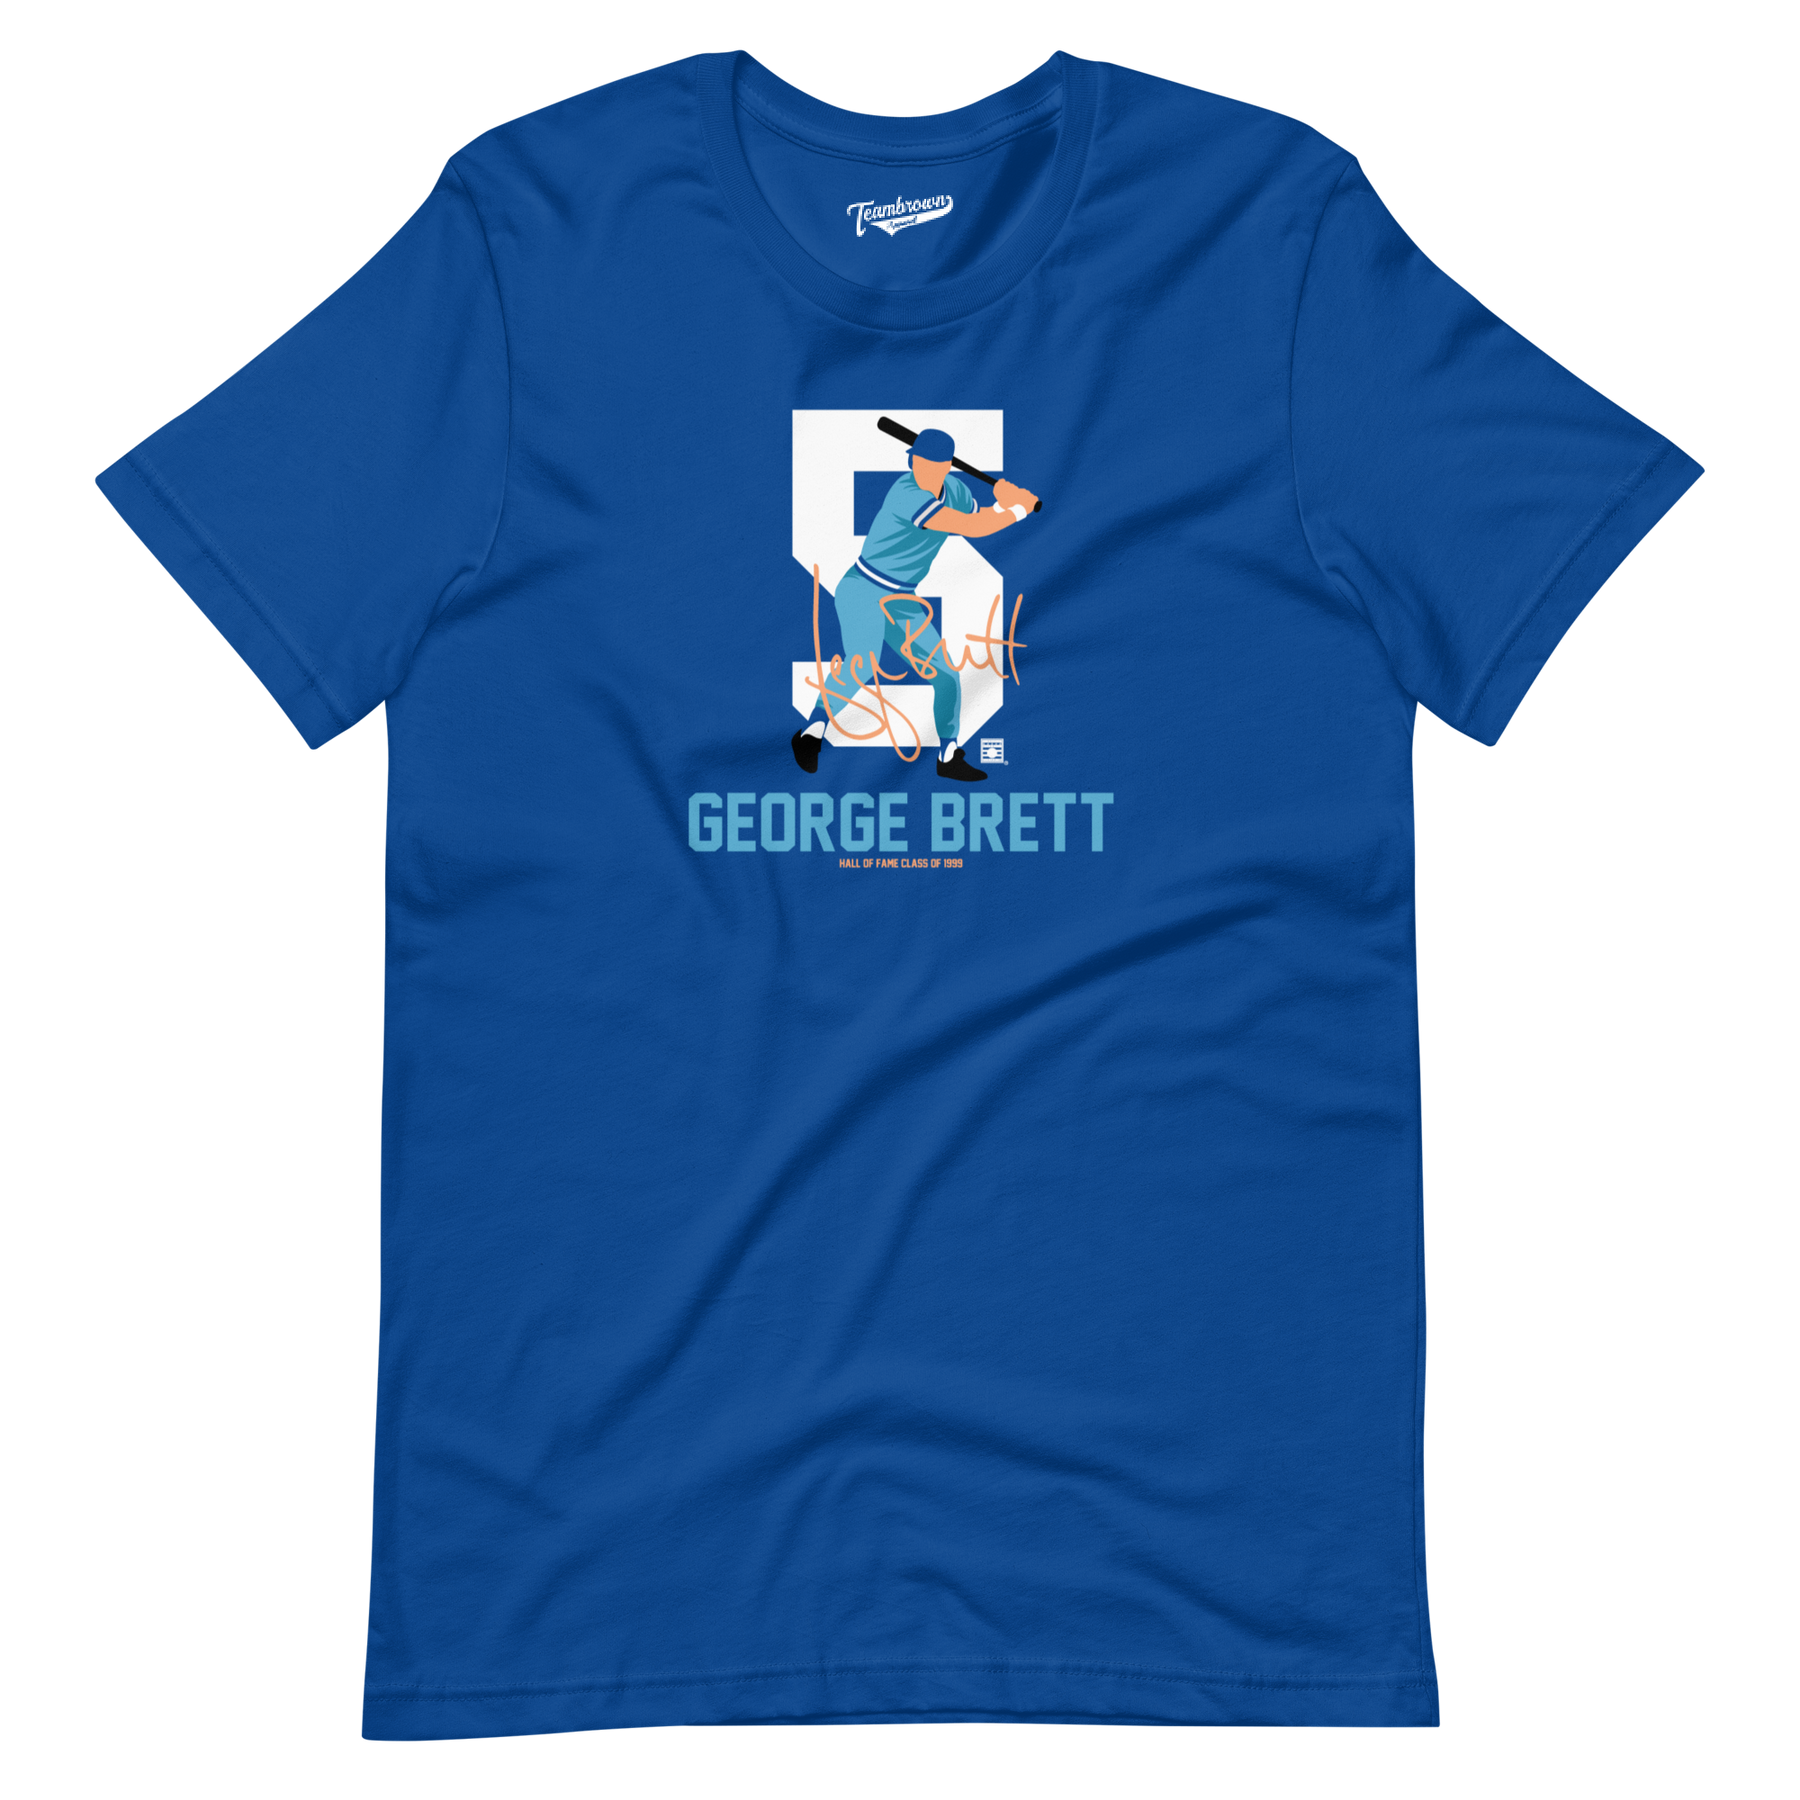 1976 Chicago White Sox Art T-Shirt